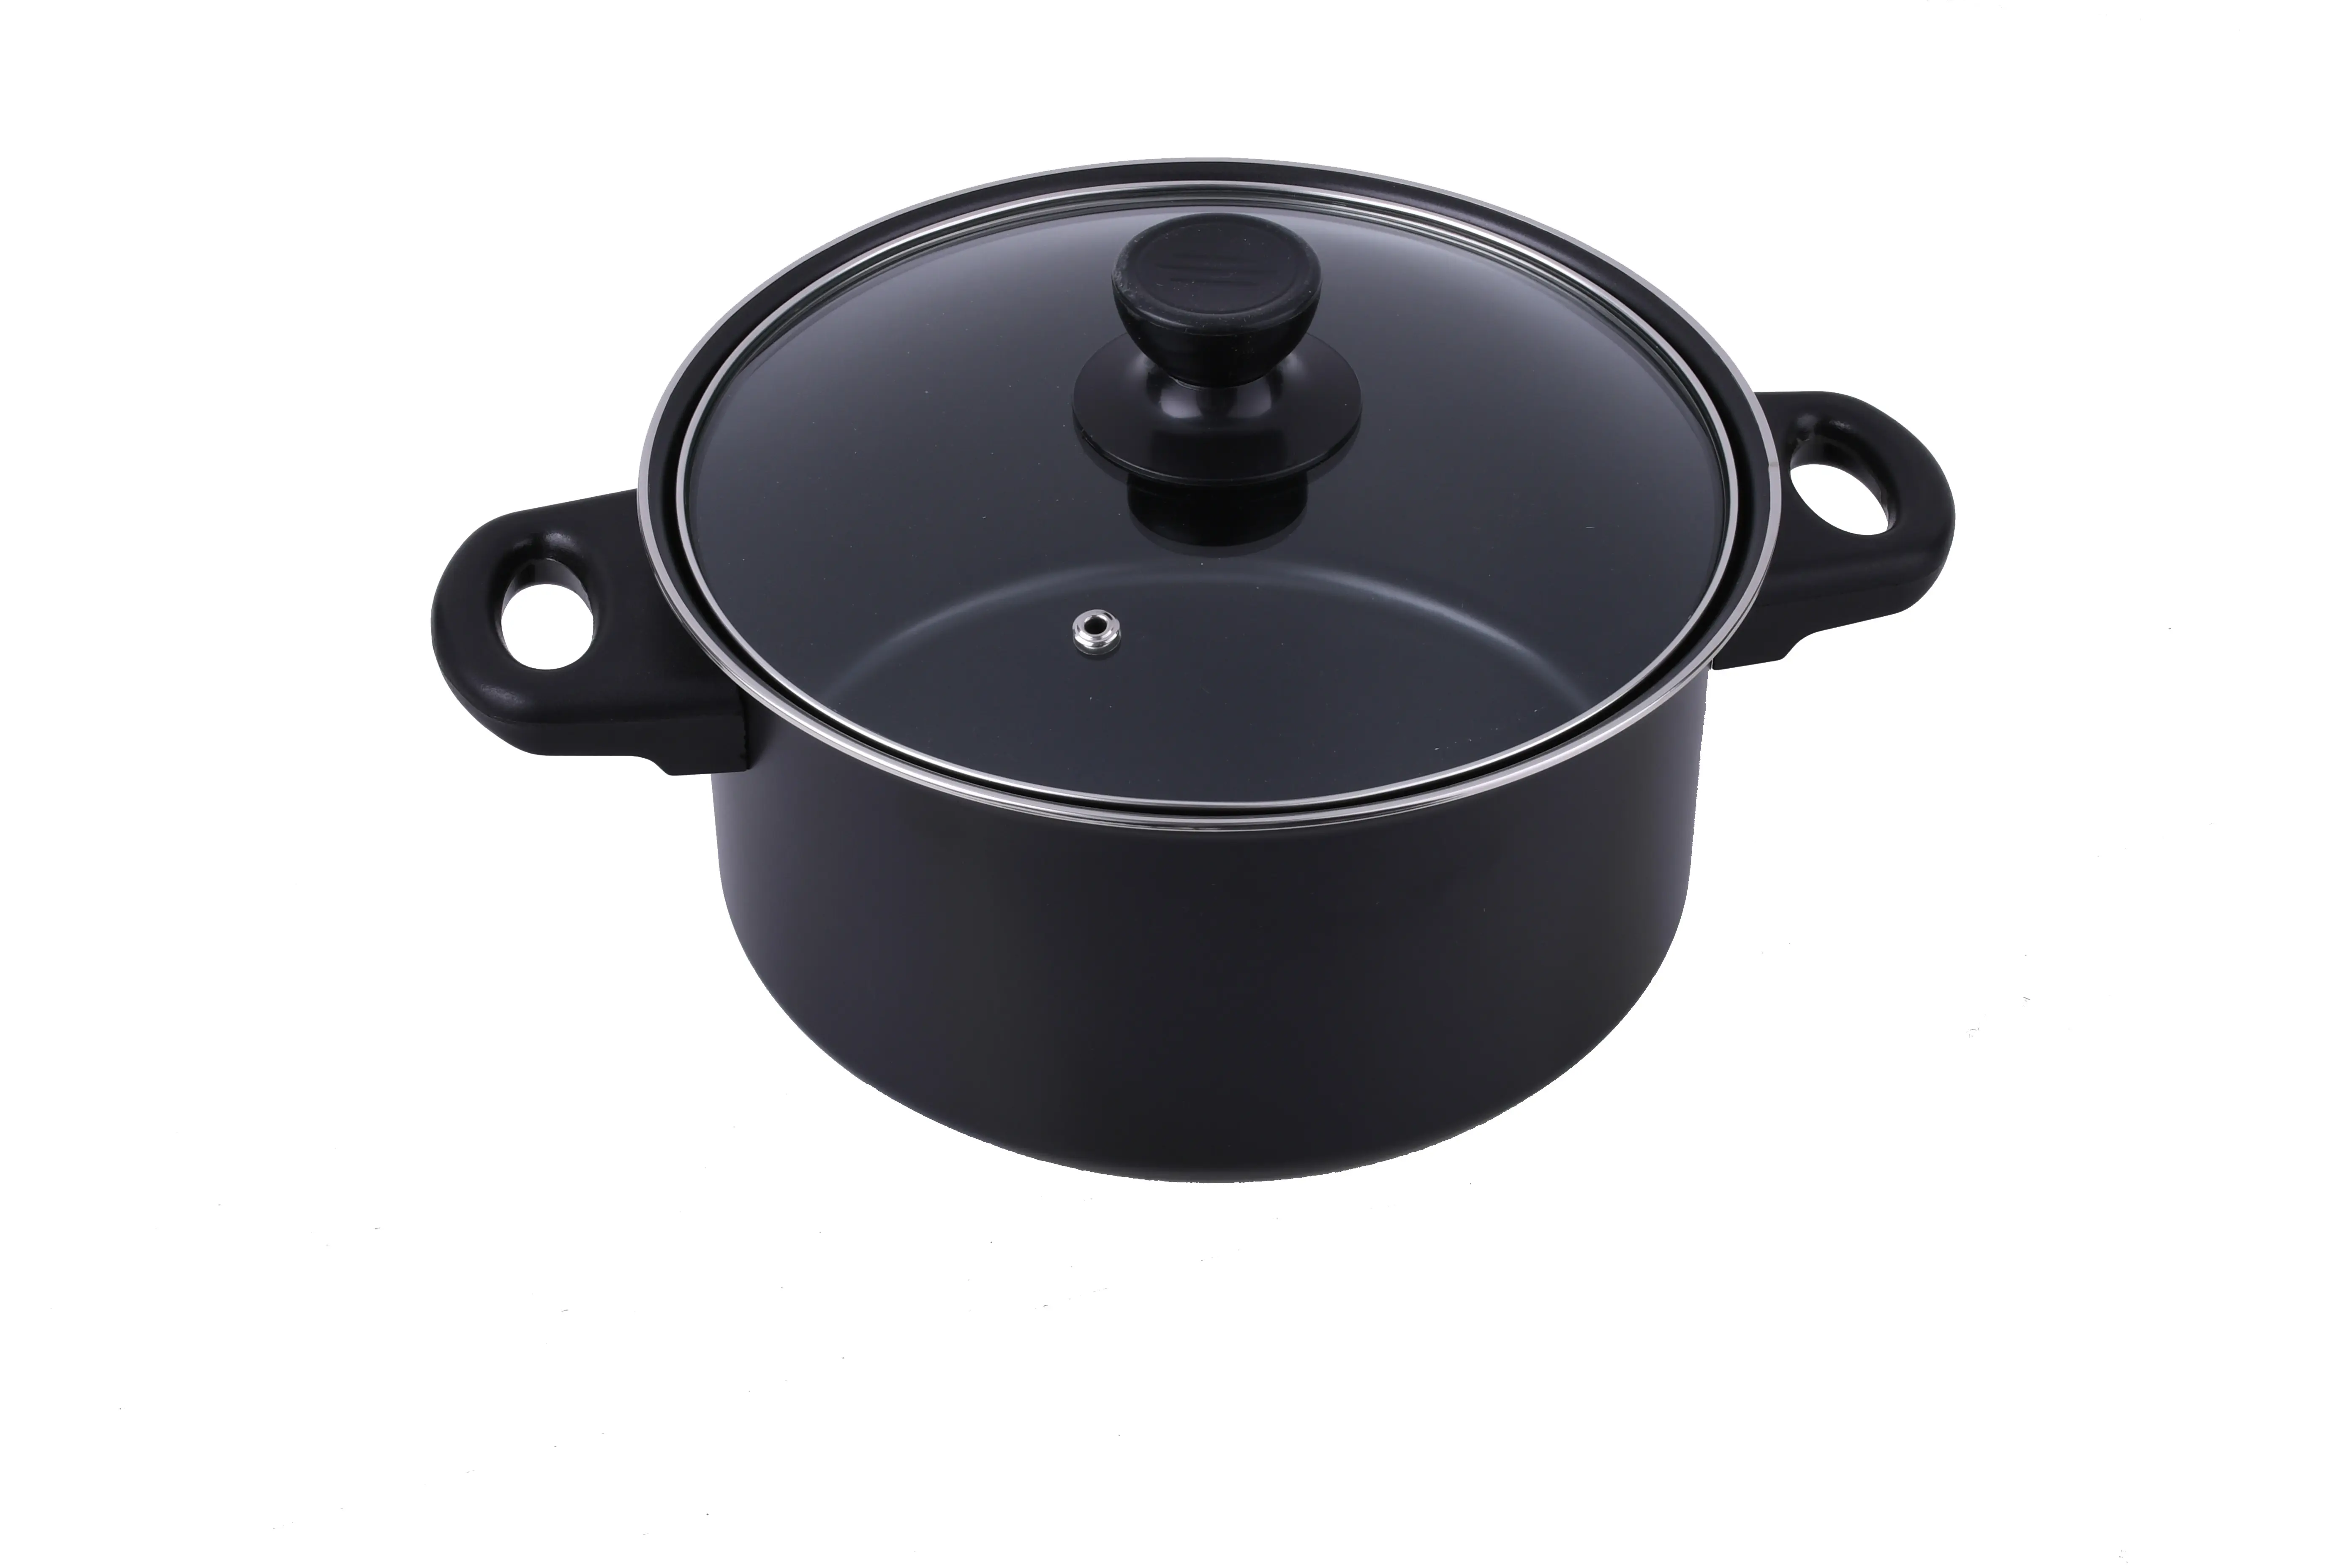 Wholesale cookware saucepan pots and pans kitchen ware non stick cast iron cookware set with glass lid soup pot